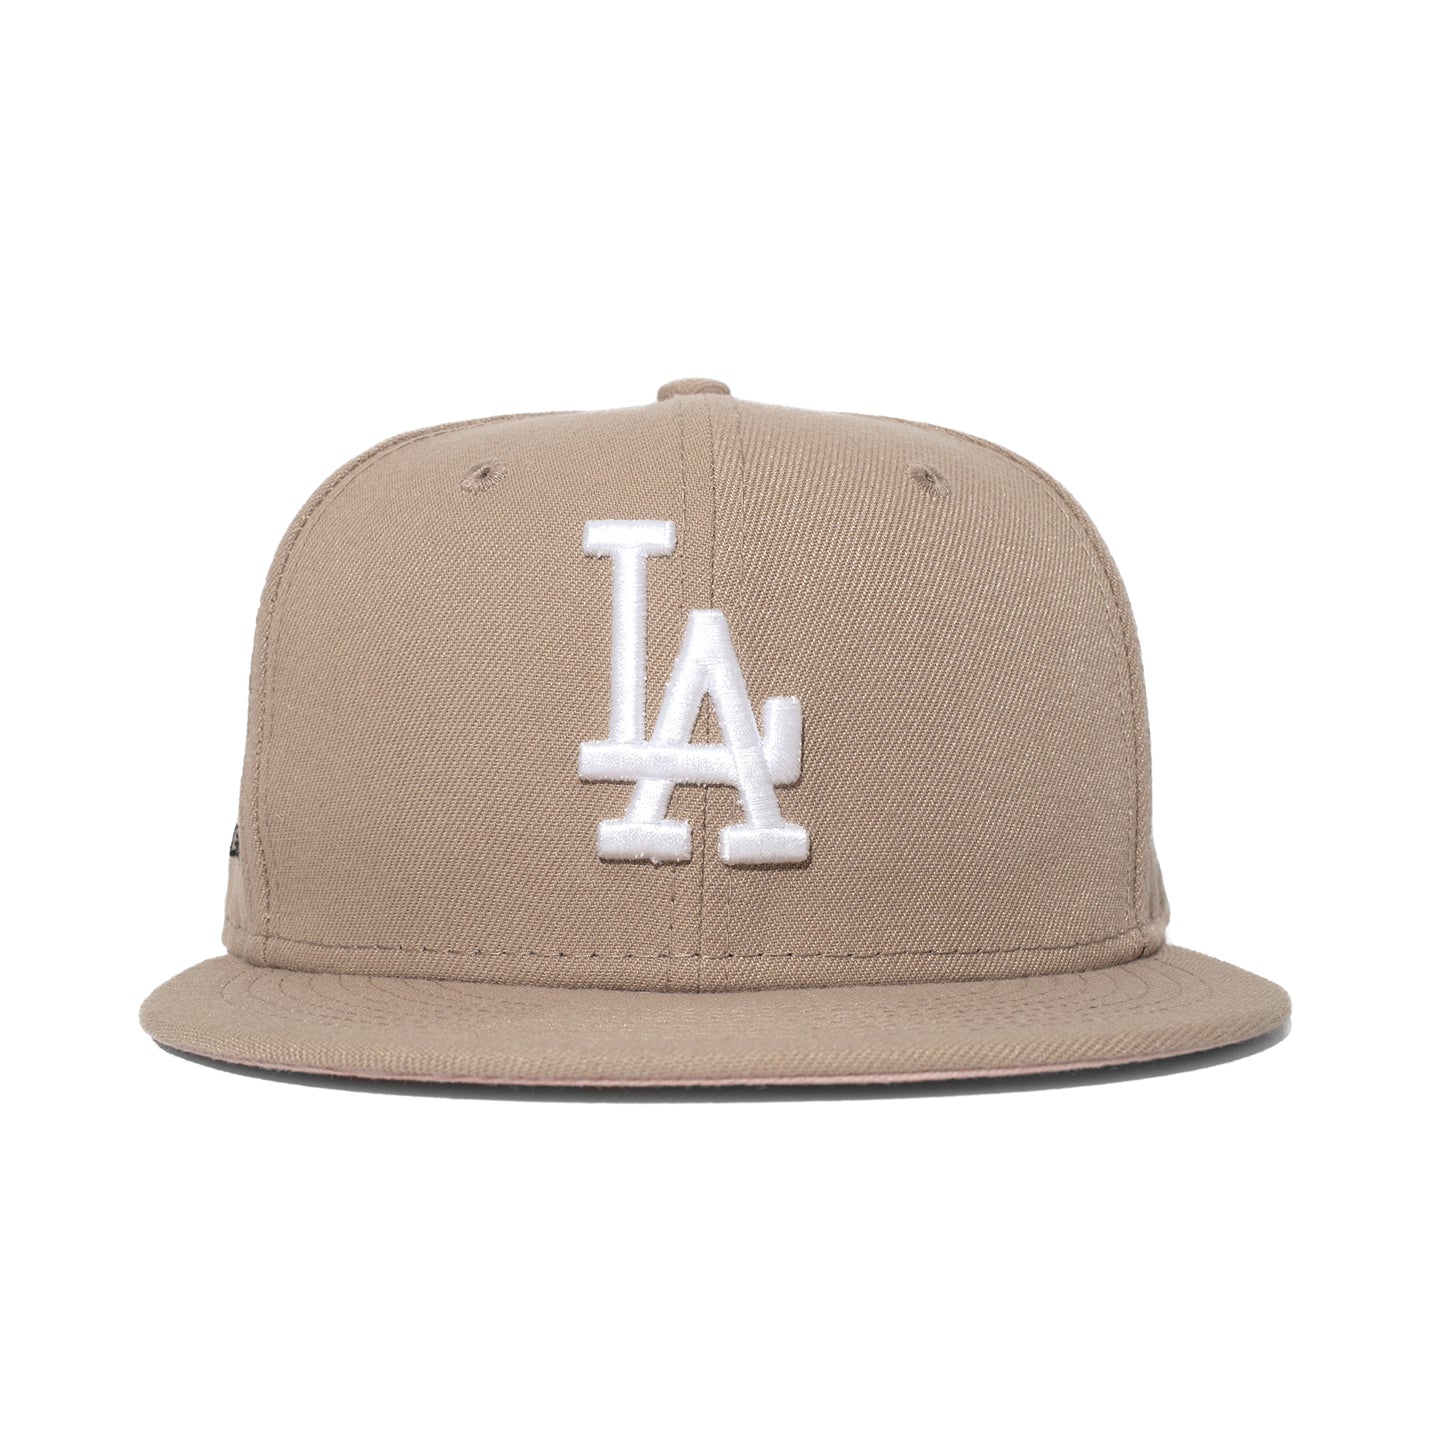 Los Angeles Dodgers by JFG (CAMEL) – JOE FRESHGOODS